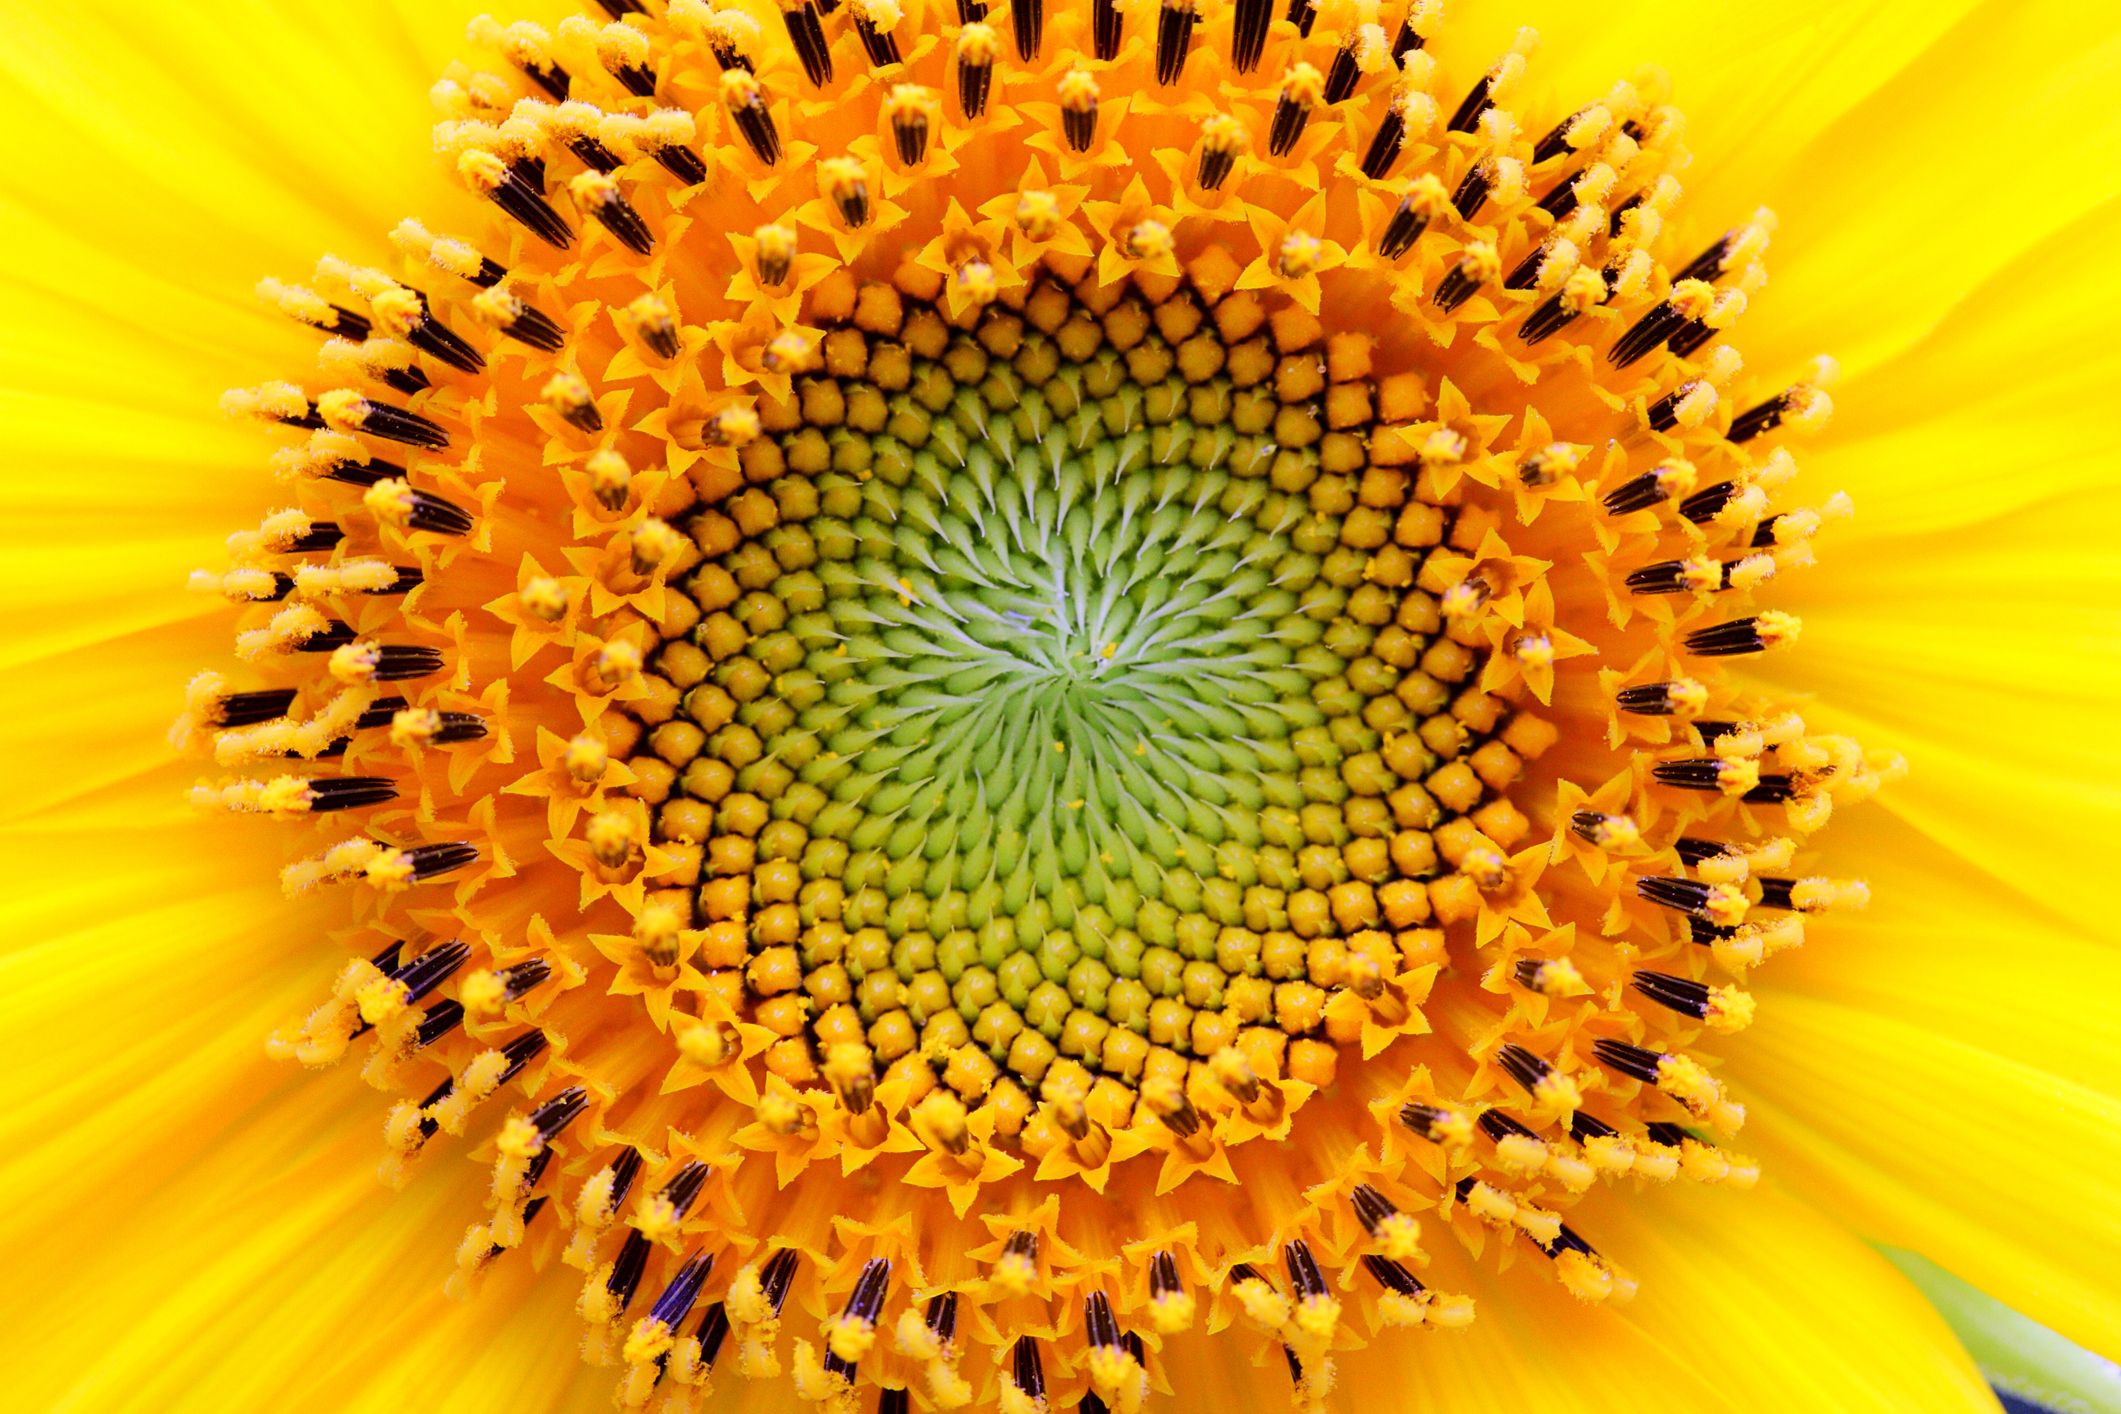 Fibonacci's sequence in a sunflower.